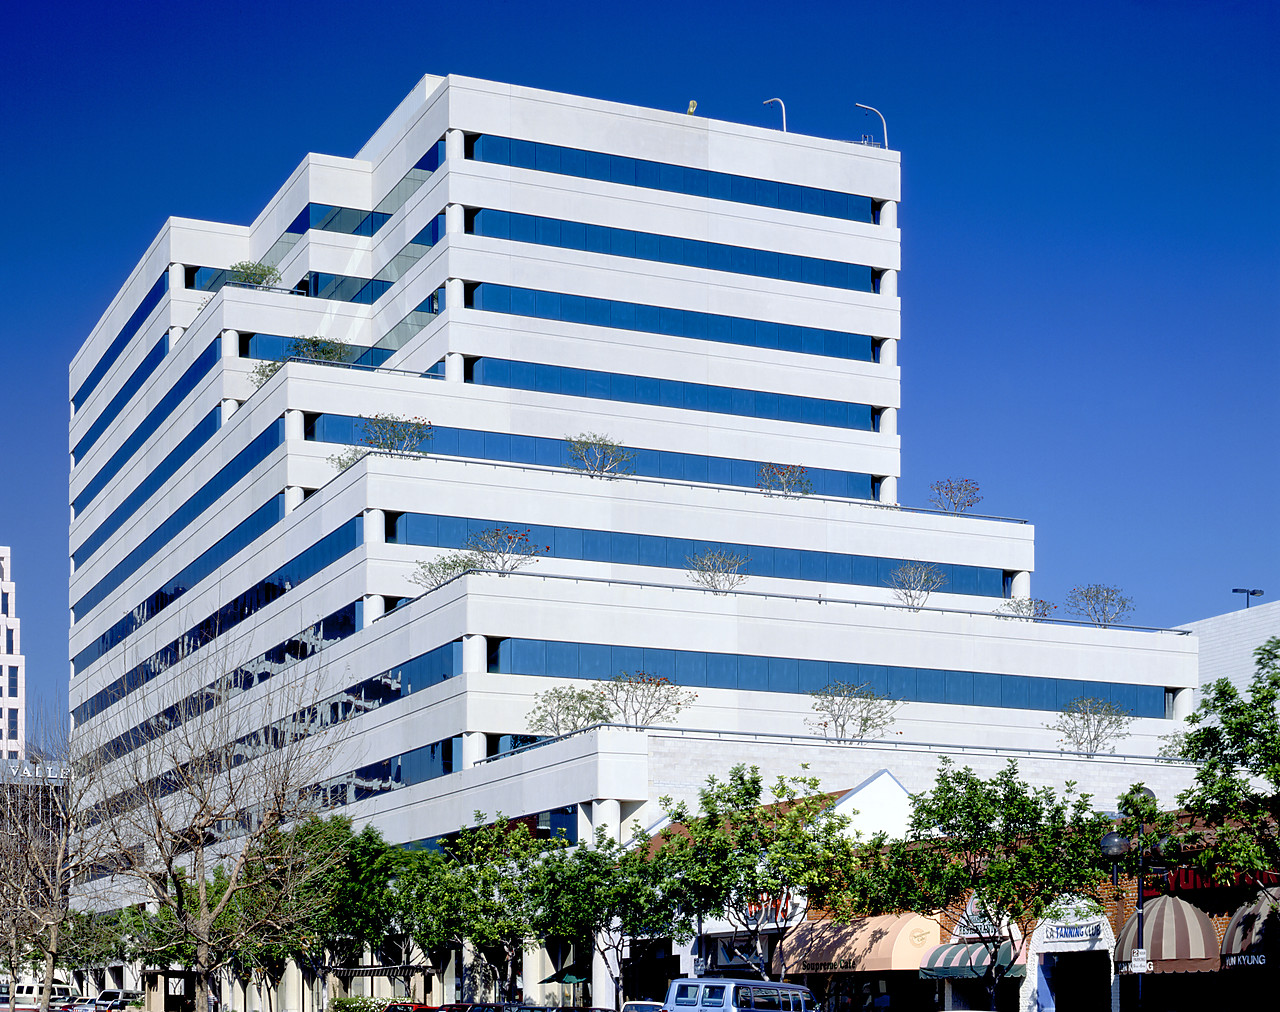 #881488 - Office Building, Glendale, California, USA